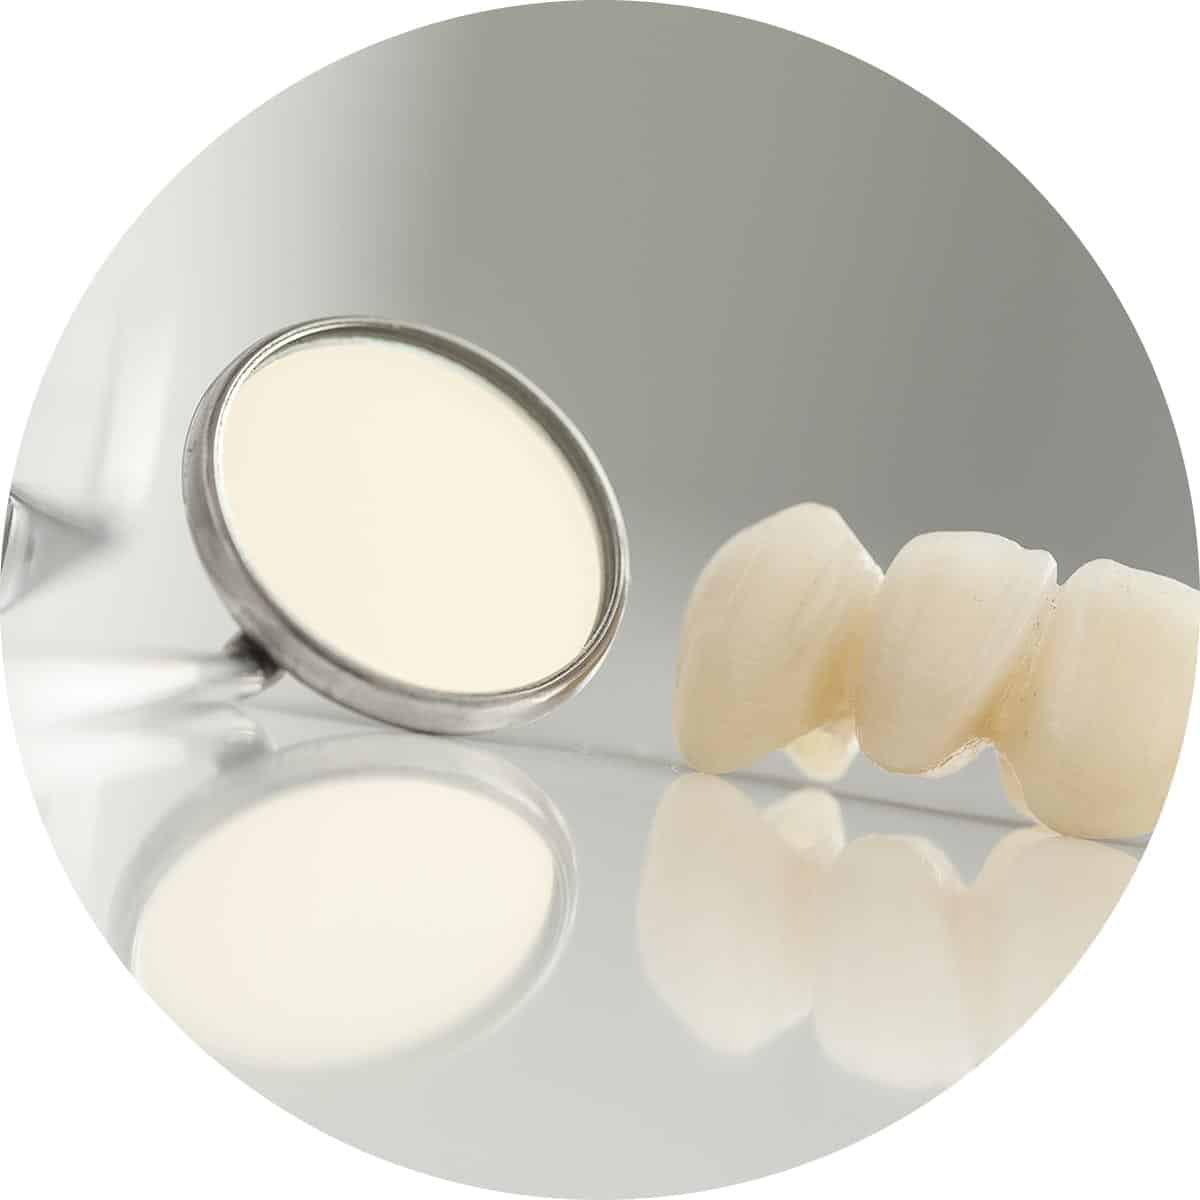 Crowns and Bridges Dental Treatment